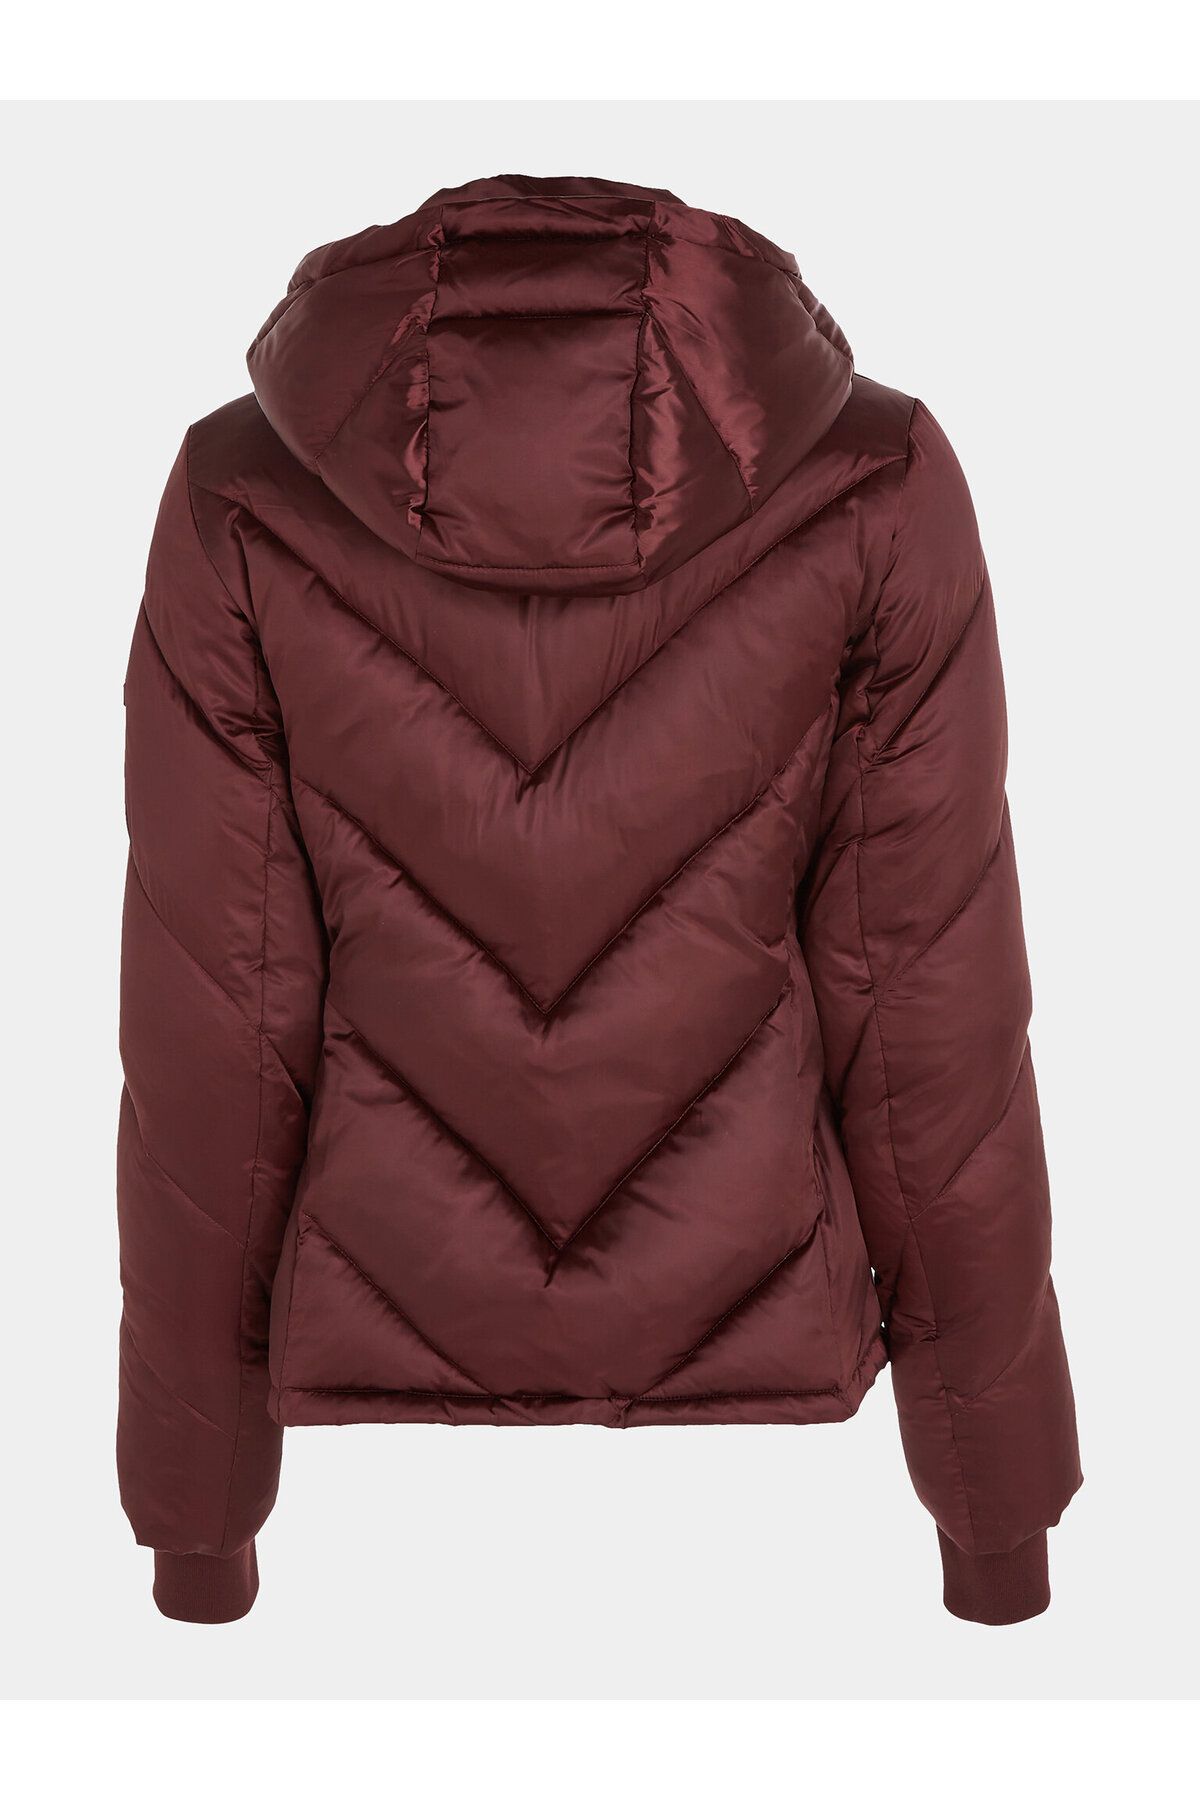 Calvin Klein Winter Jacket - Burgundy - Relaxed fit - Trendyol